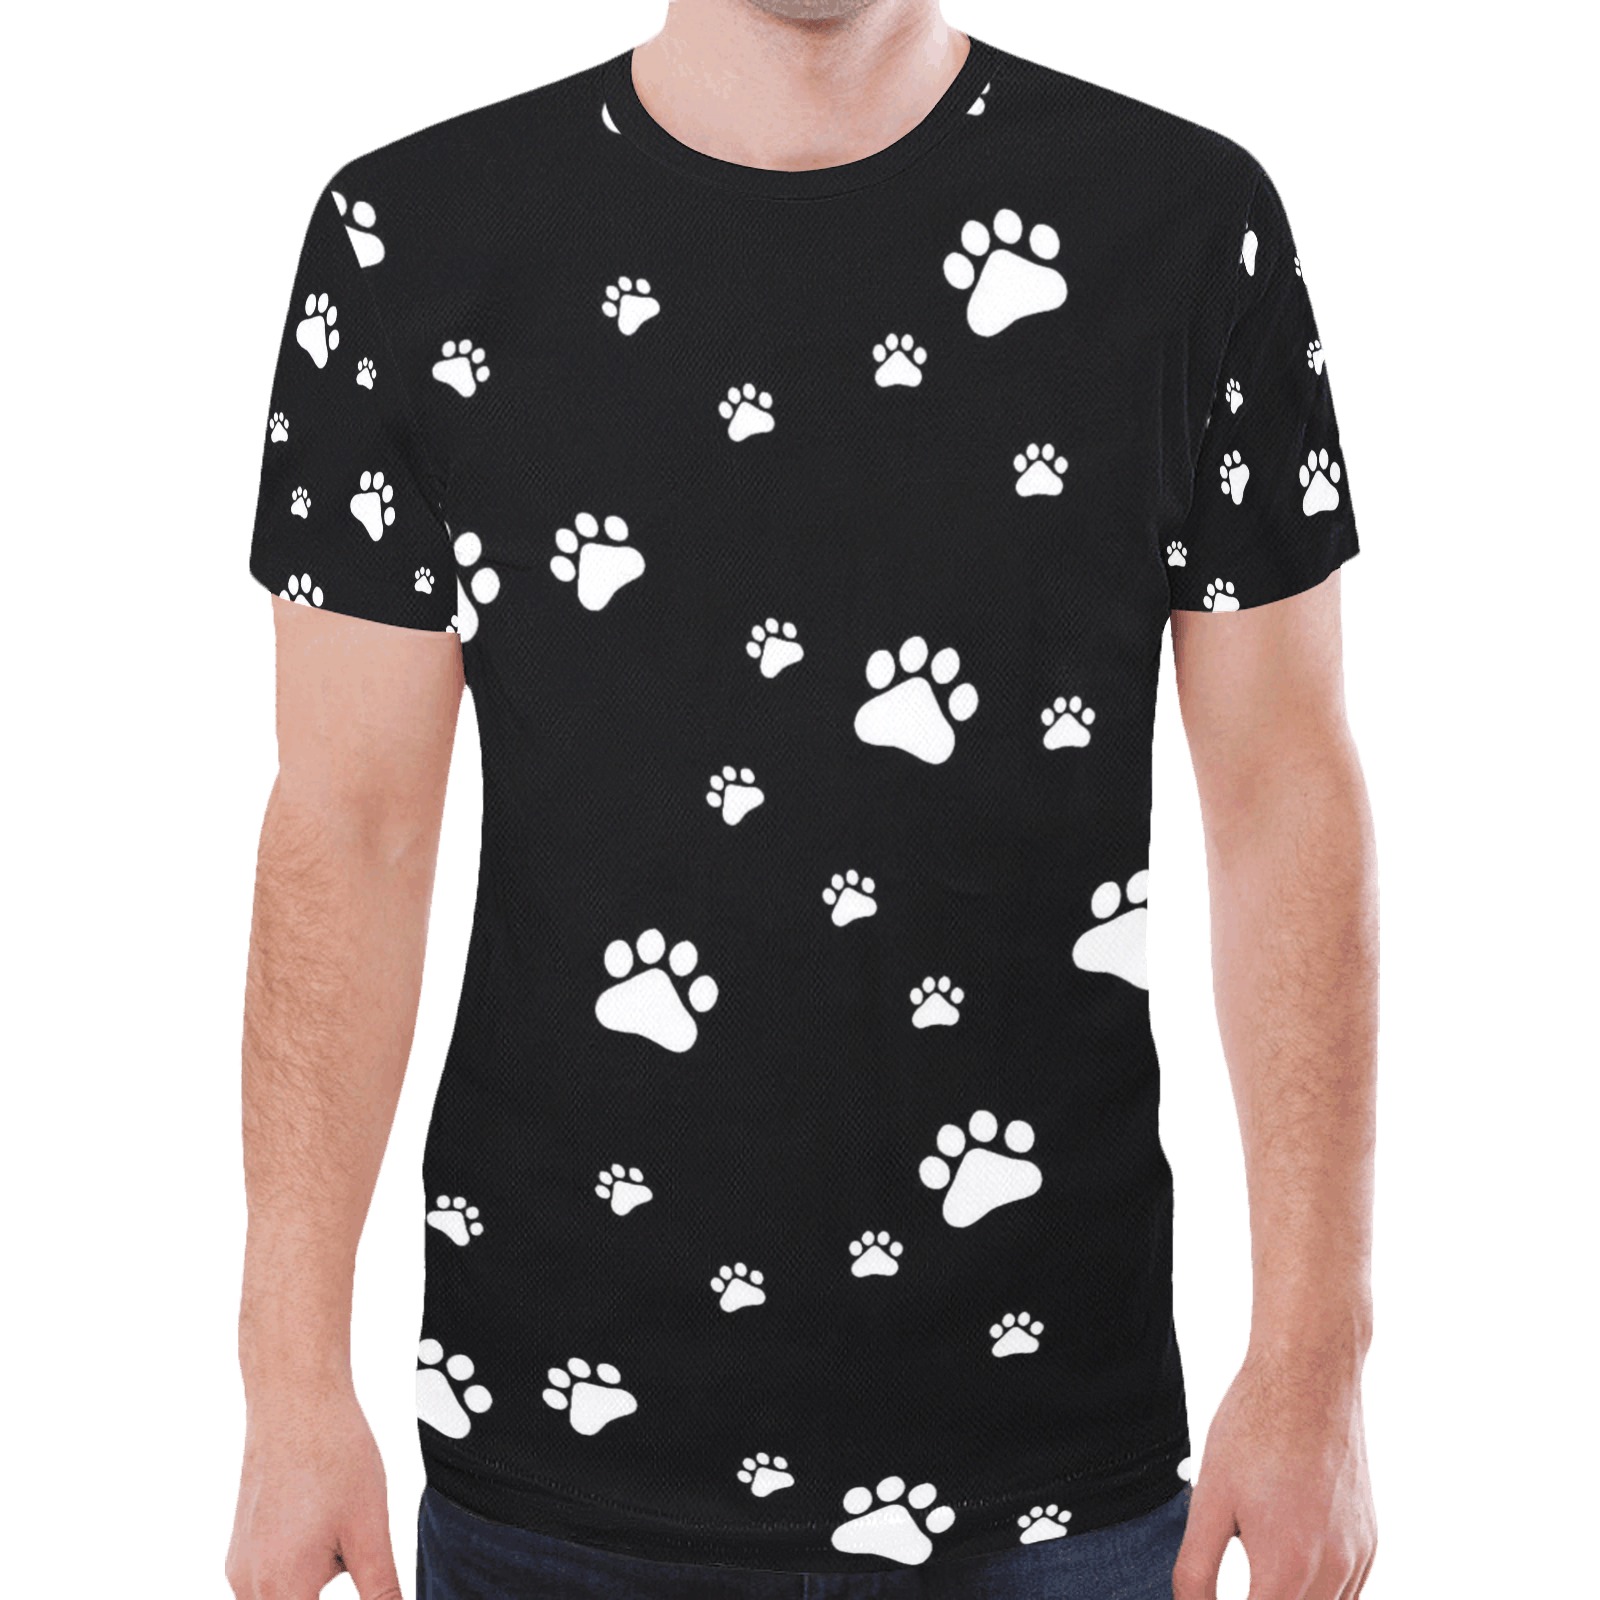 Puppy Owner by Fetishworld New All Over Print T-shirt for Men (Model T45)